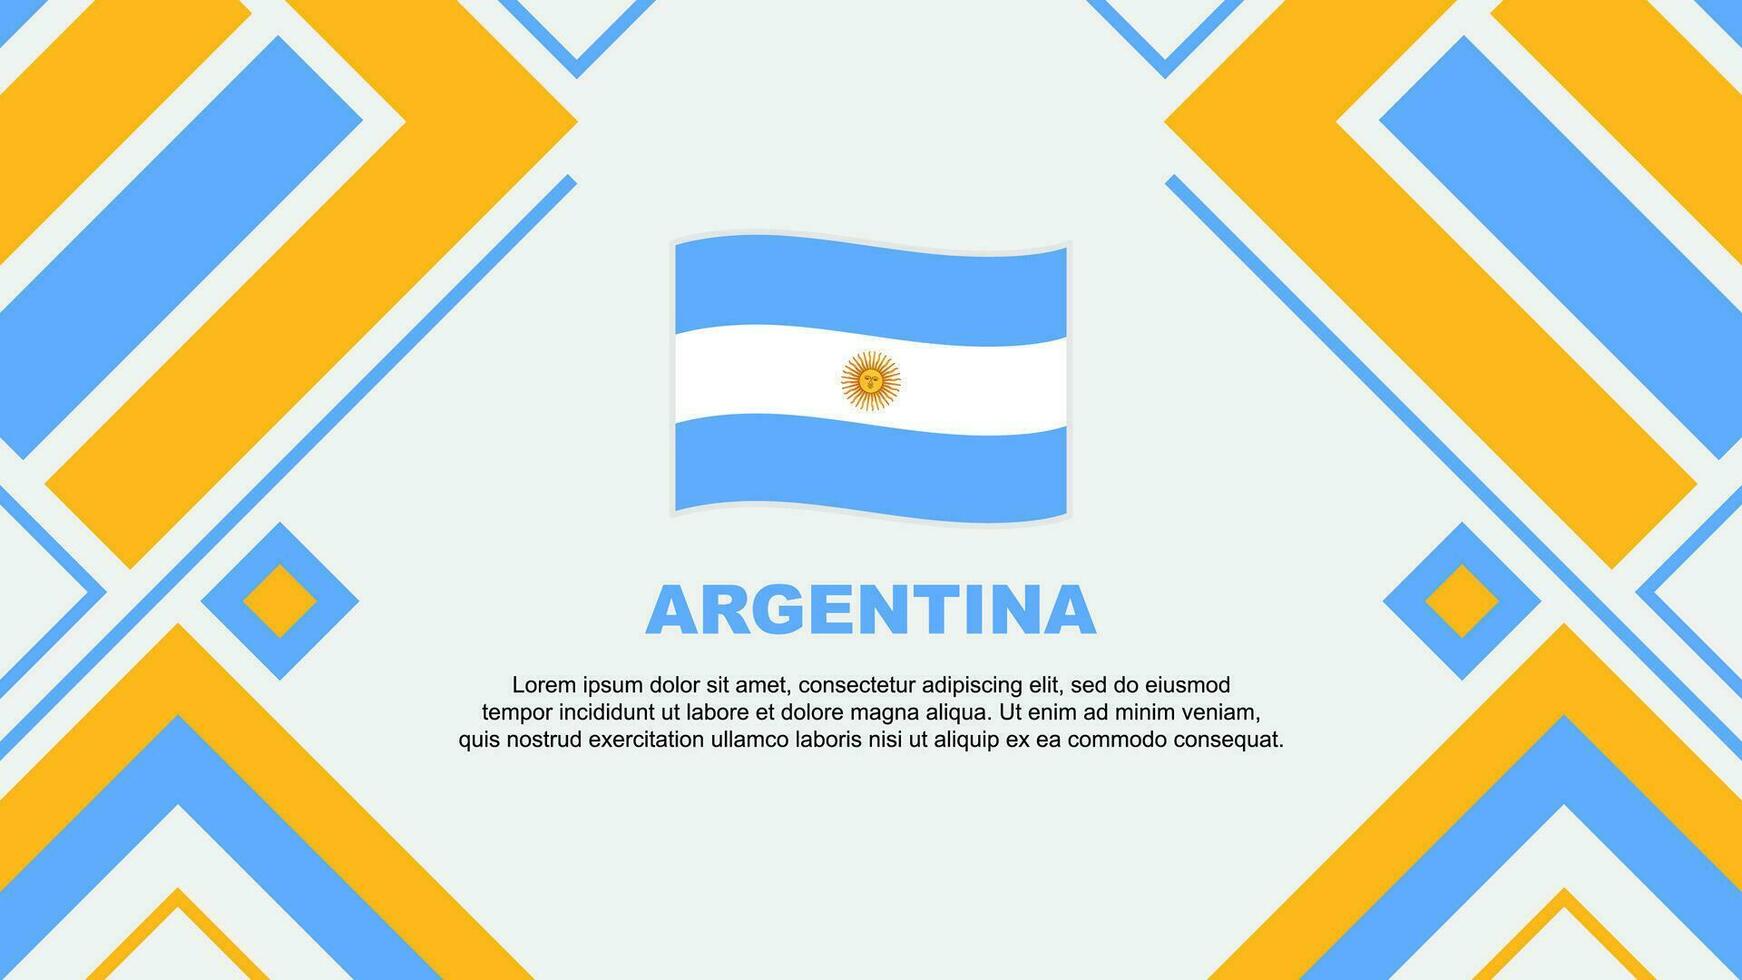 Argentina Flag Abstract Background Design Template. Argentina Independence Day Banner Wallpaper Vector Illustration. Argentina Flag